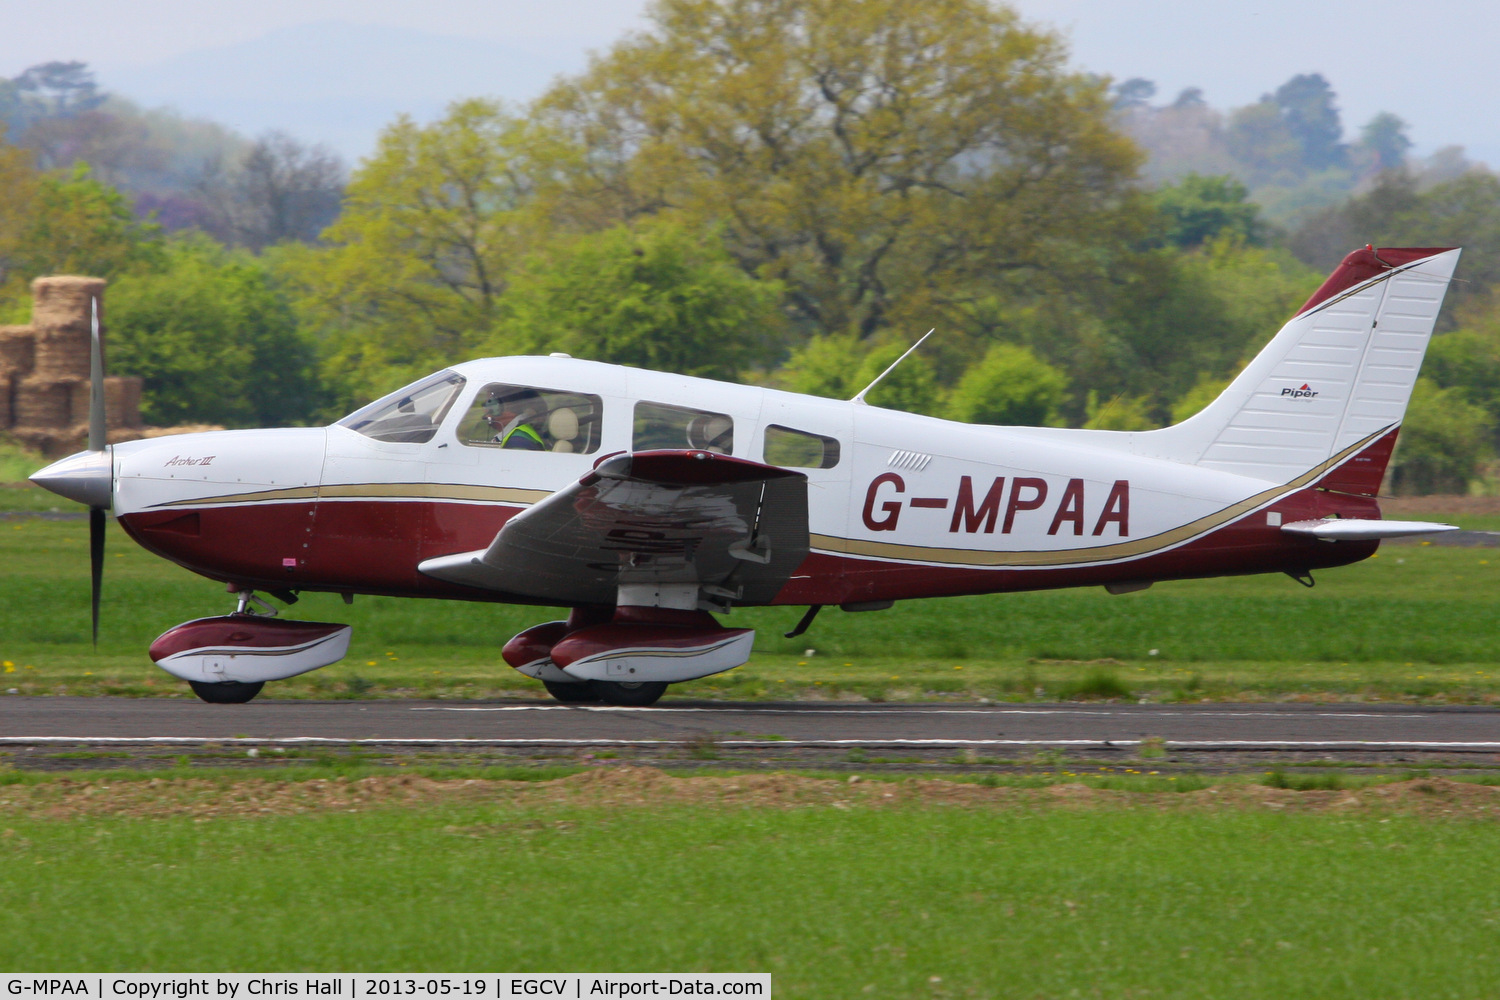 G-MPAA, 2002 Piper PA-28-181 Cherokee Archer III C/N 2843539, Sleap resident